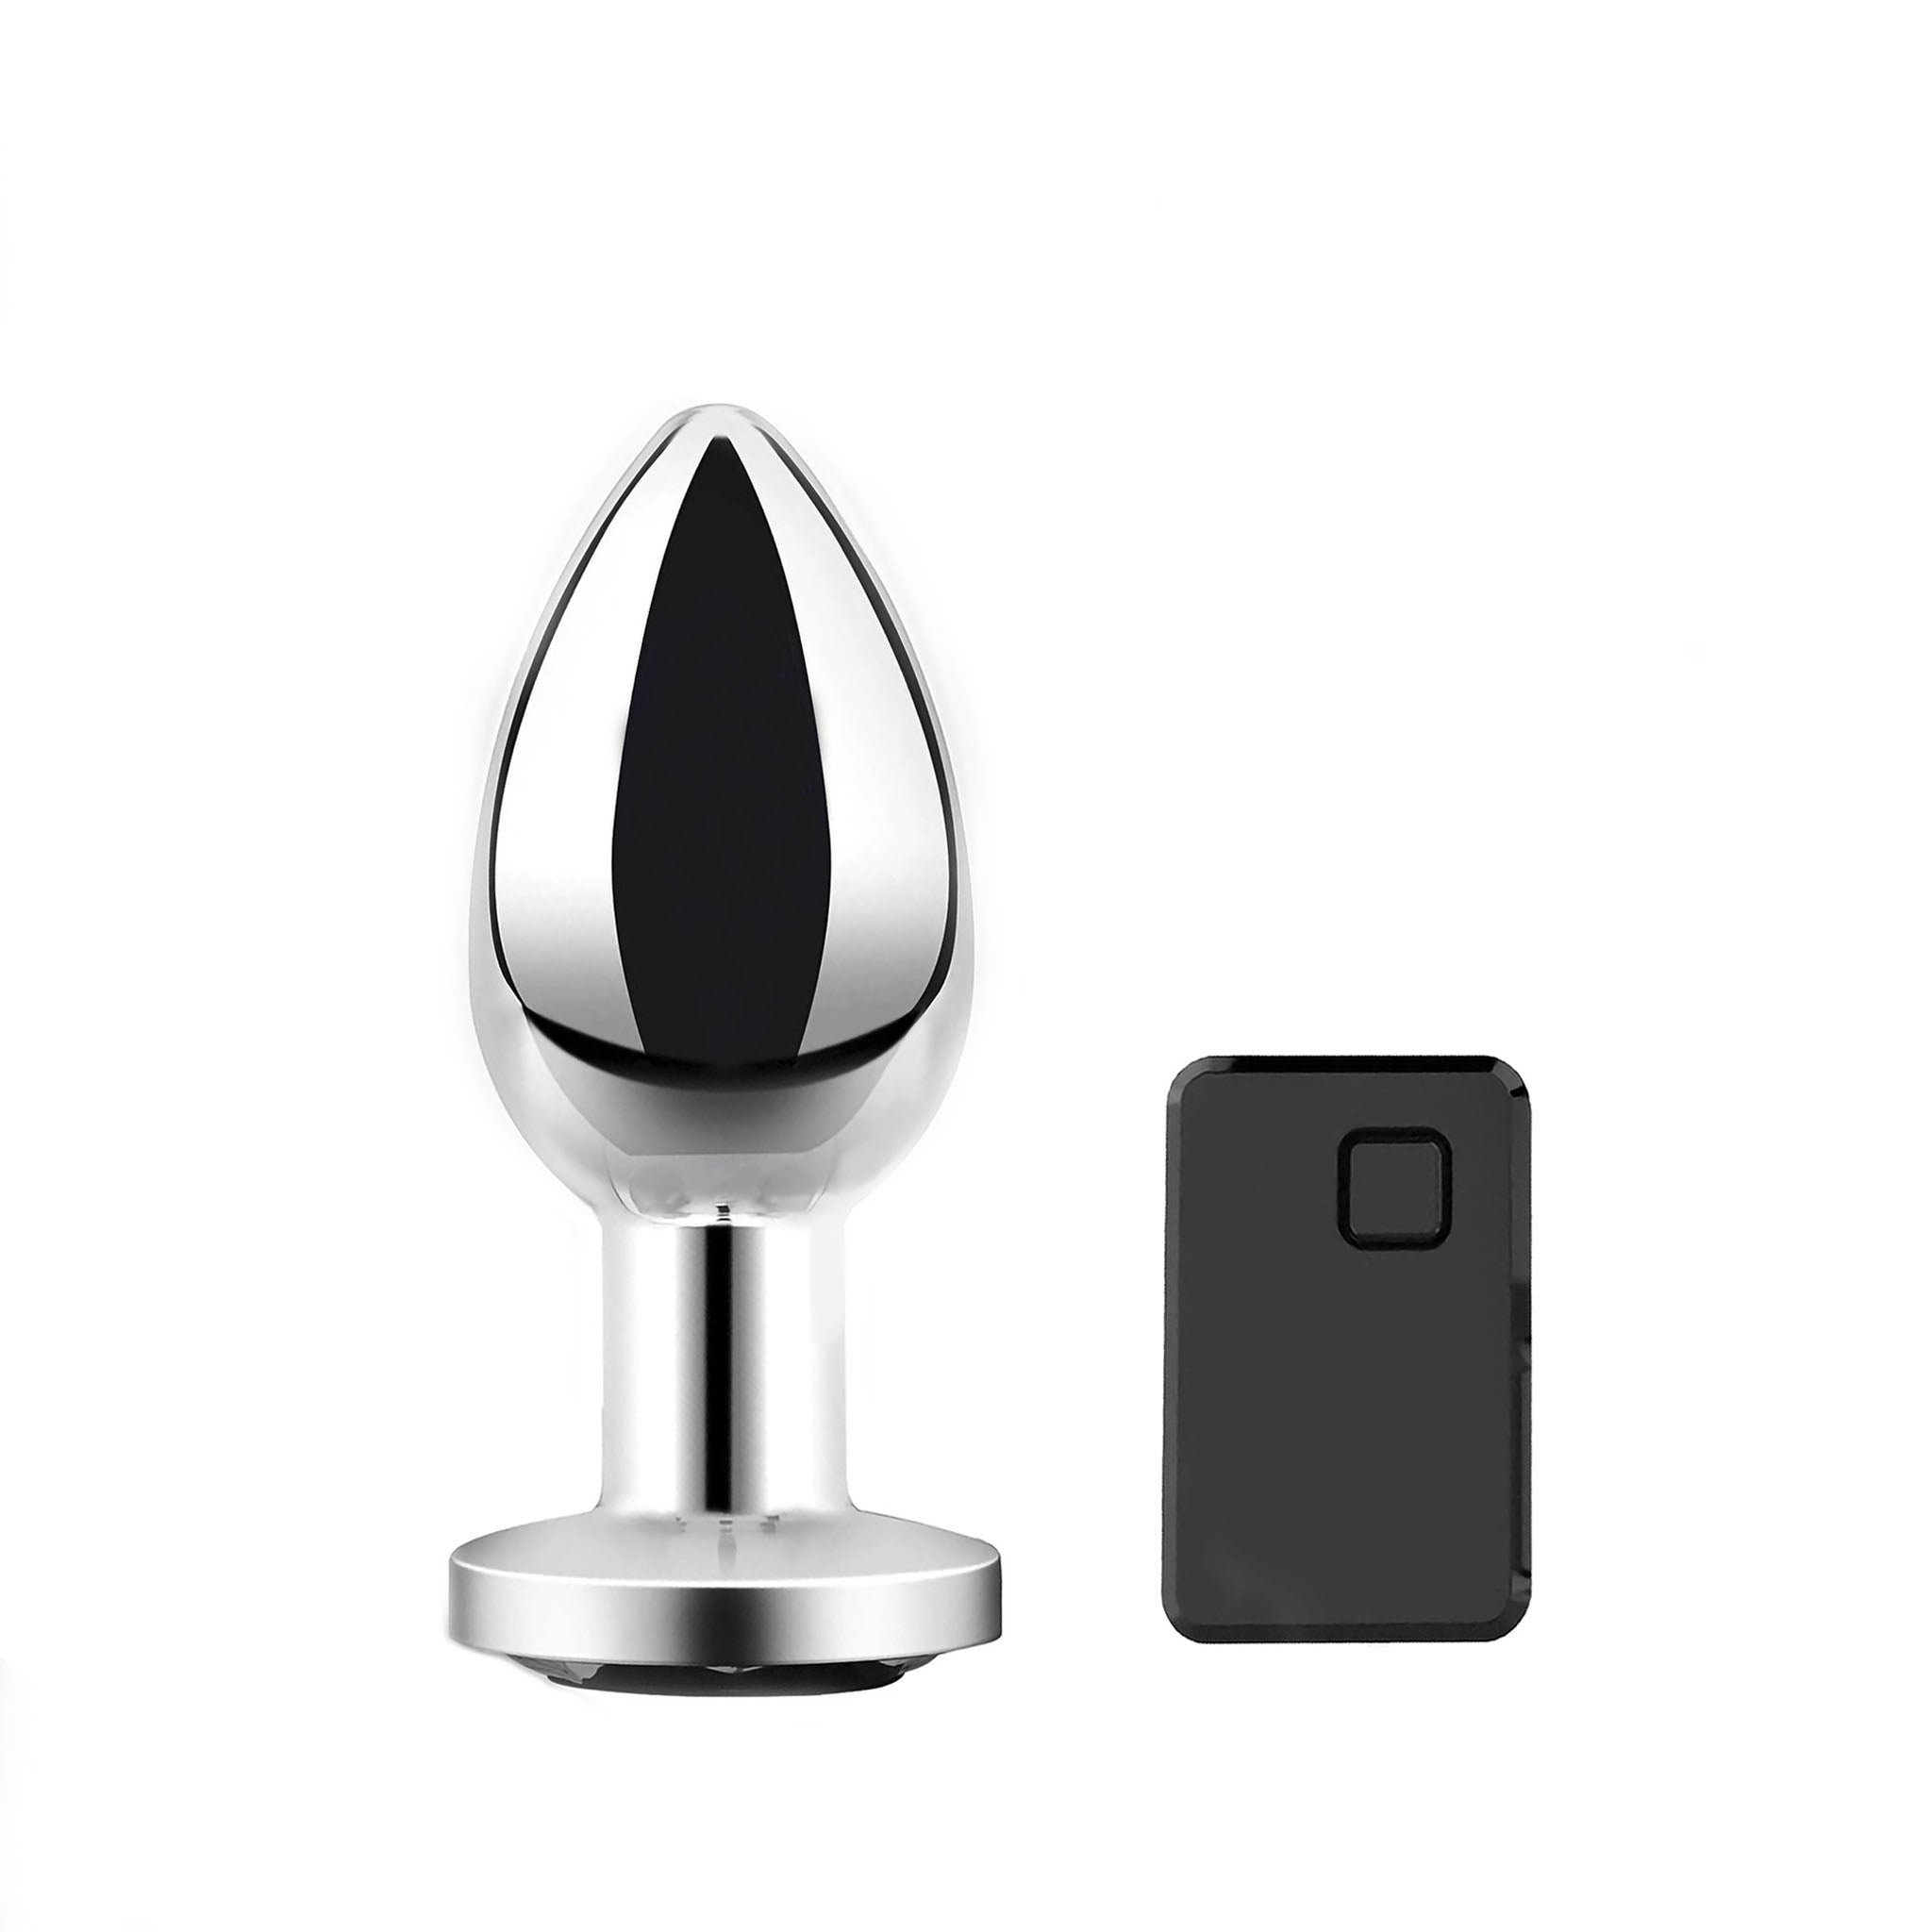 Wireless Remote Control Vibrating Metal Anal Butt Plug Vibrator Sex Toys